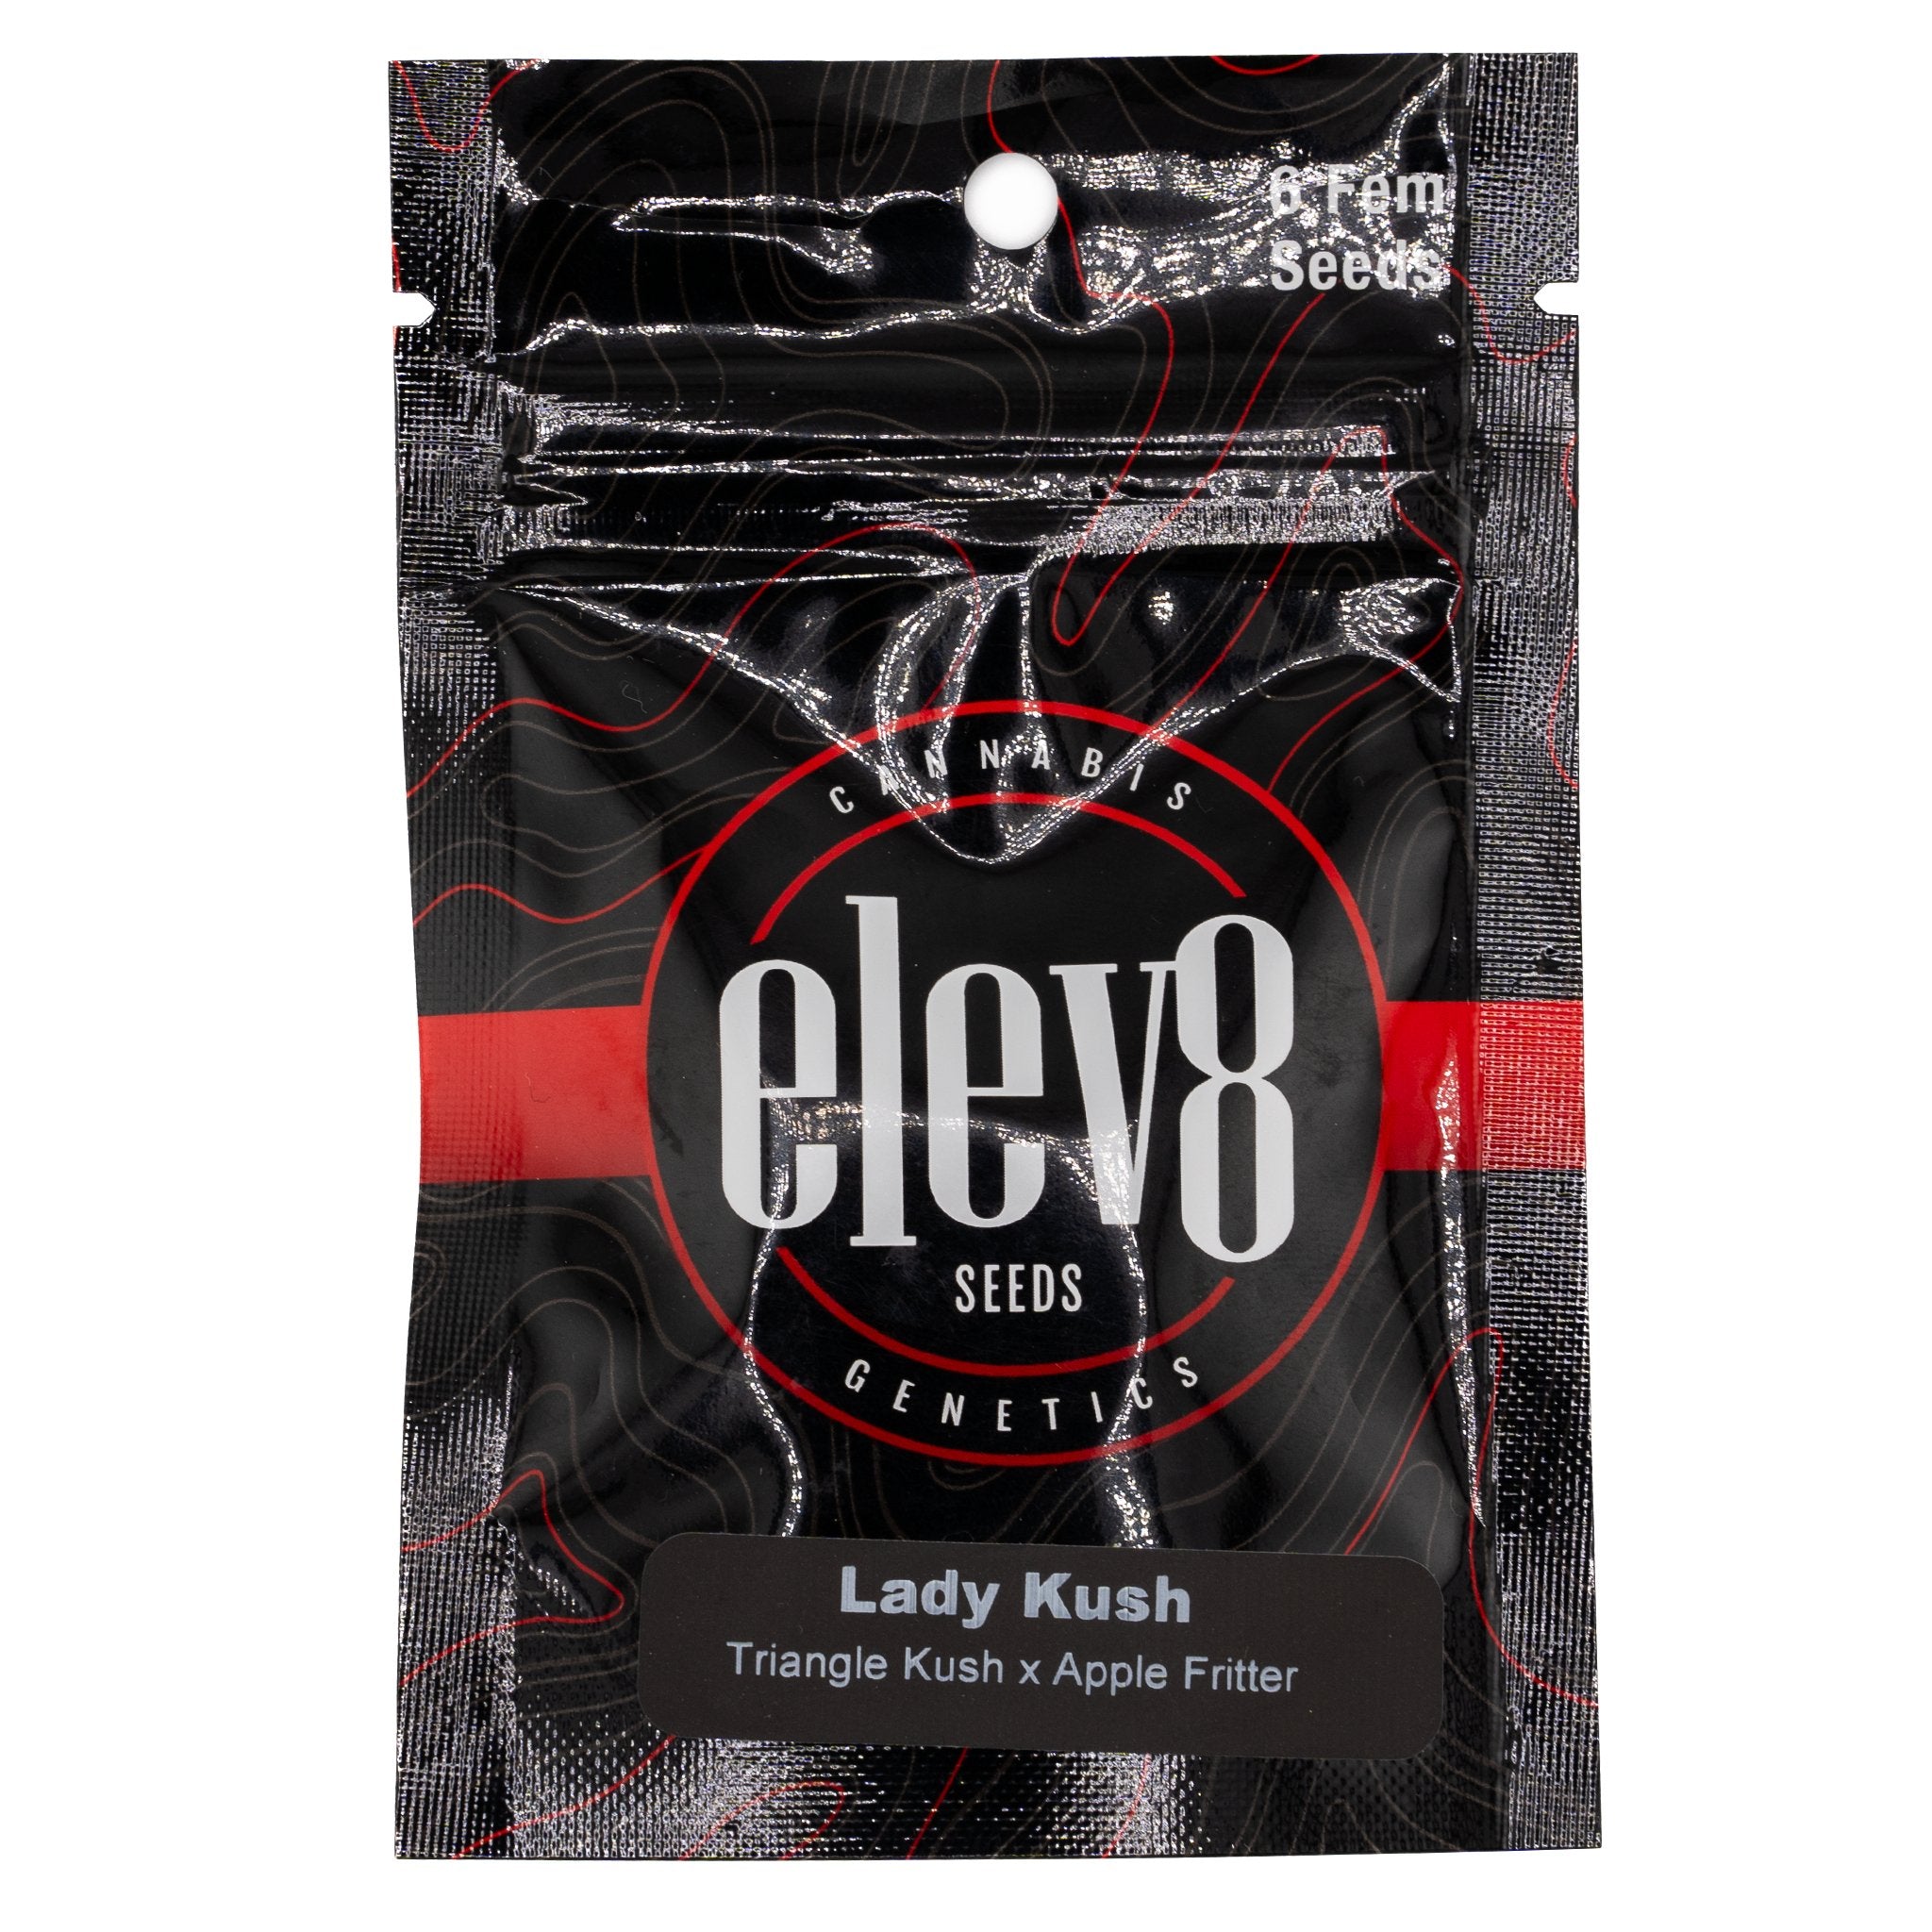 ELEV8 SEEDS Cannabis Seeds